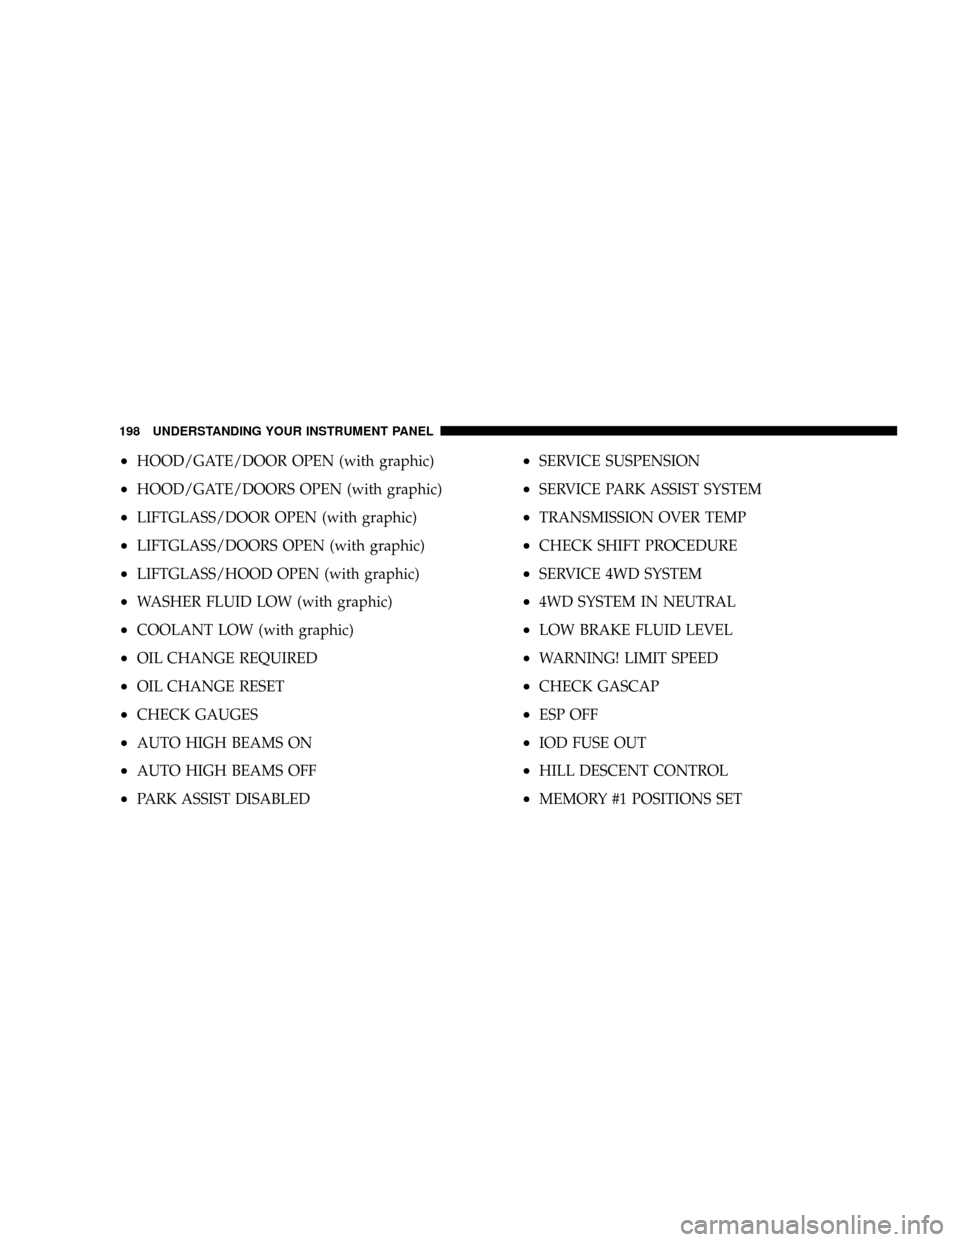 JEEP COMMANDER 2008 1.G Manual PDF ²HOOD/GATE/DOOR OPEN (with graphic)
²HOOD/GATE/DOORS OPEN (with graphic)
²LIFTGLASS/DOOR OPEN (with graphic)
²LIFTGLASS/DOORS OPEN (with graphic)
²LIFTGLASS/HOOD OPEN (with graphic)
²WASHER FLUI